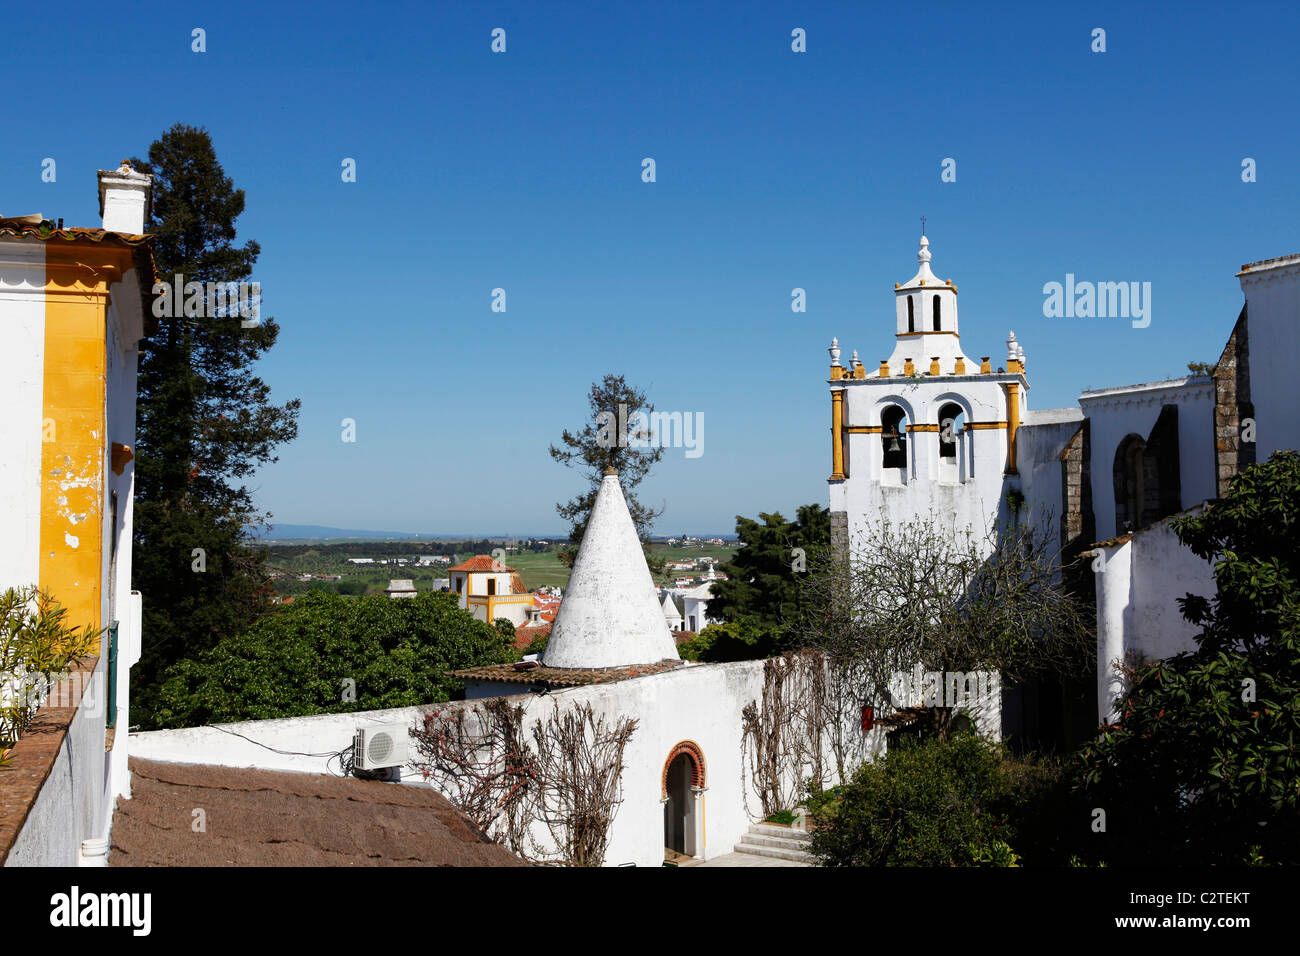 Der großherzogliche Palast in Evora, Portugal. Stockfoto